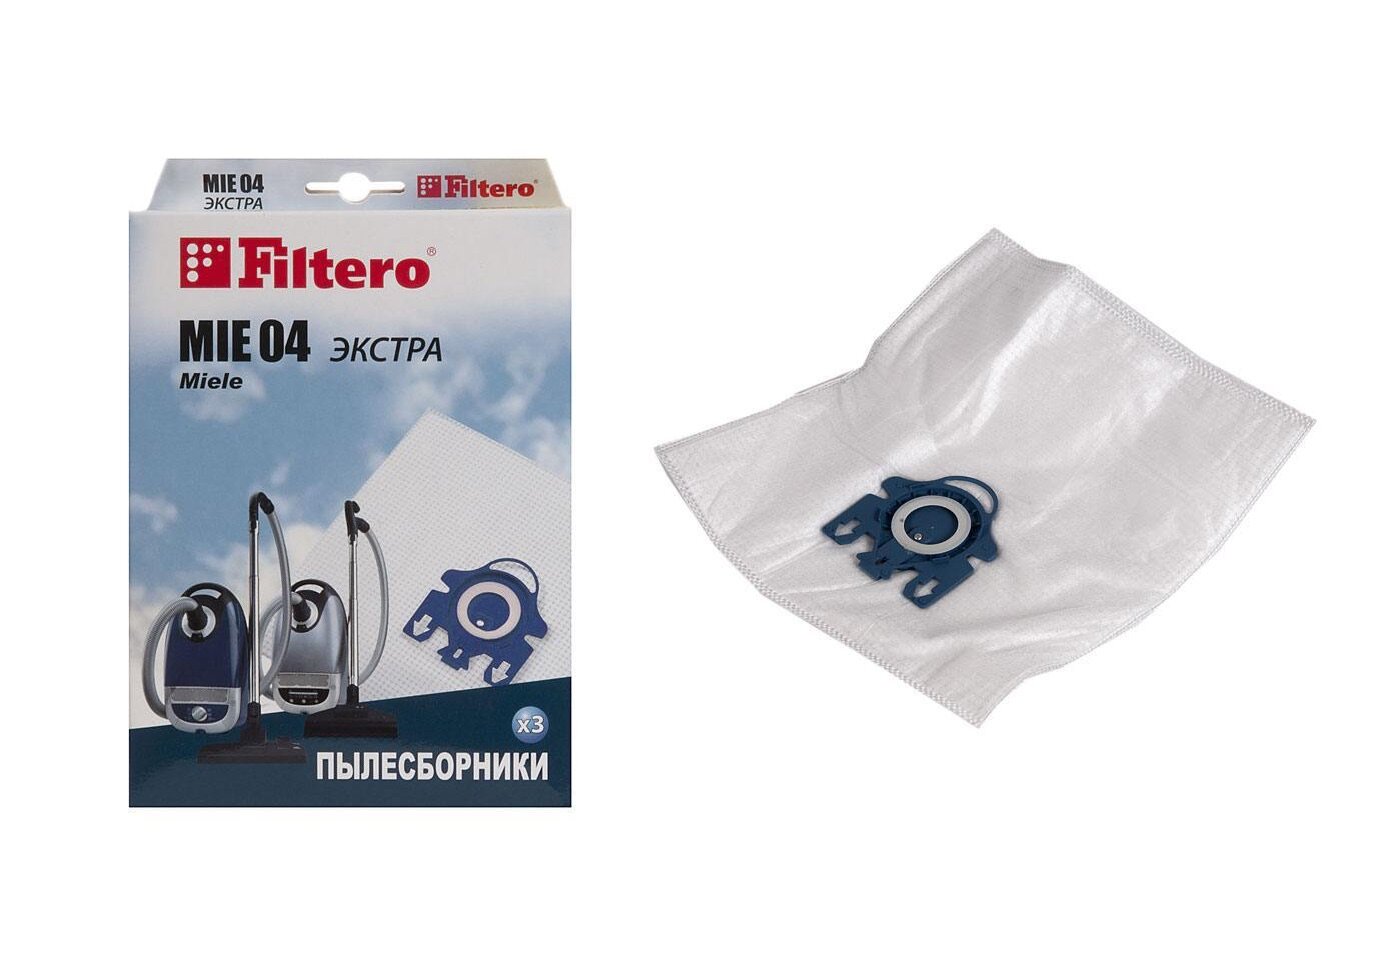 Dust collectors / Мешки для пылесосов Miele, Filtero MIE 04 экстра, (3 штуки)